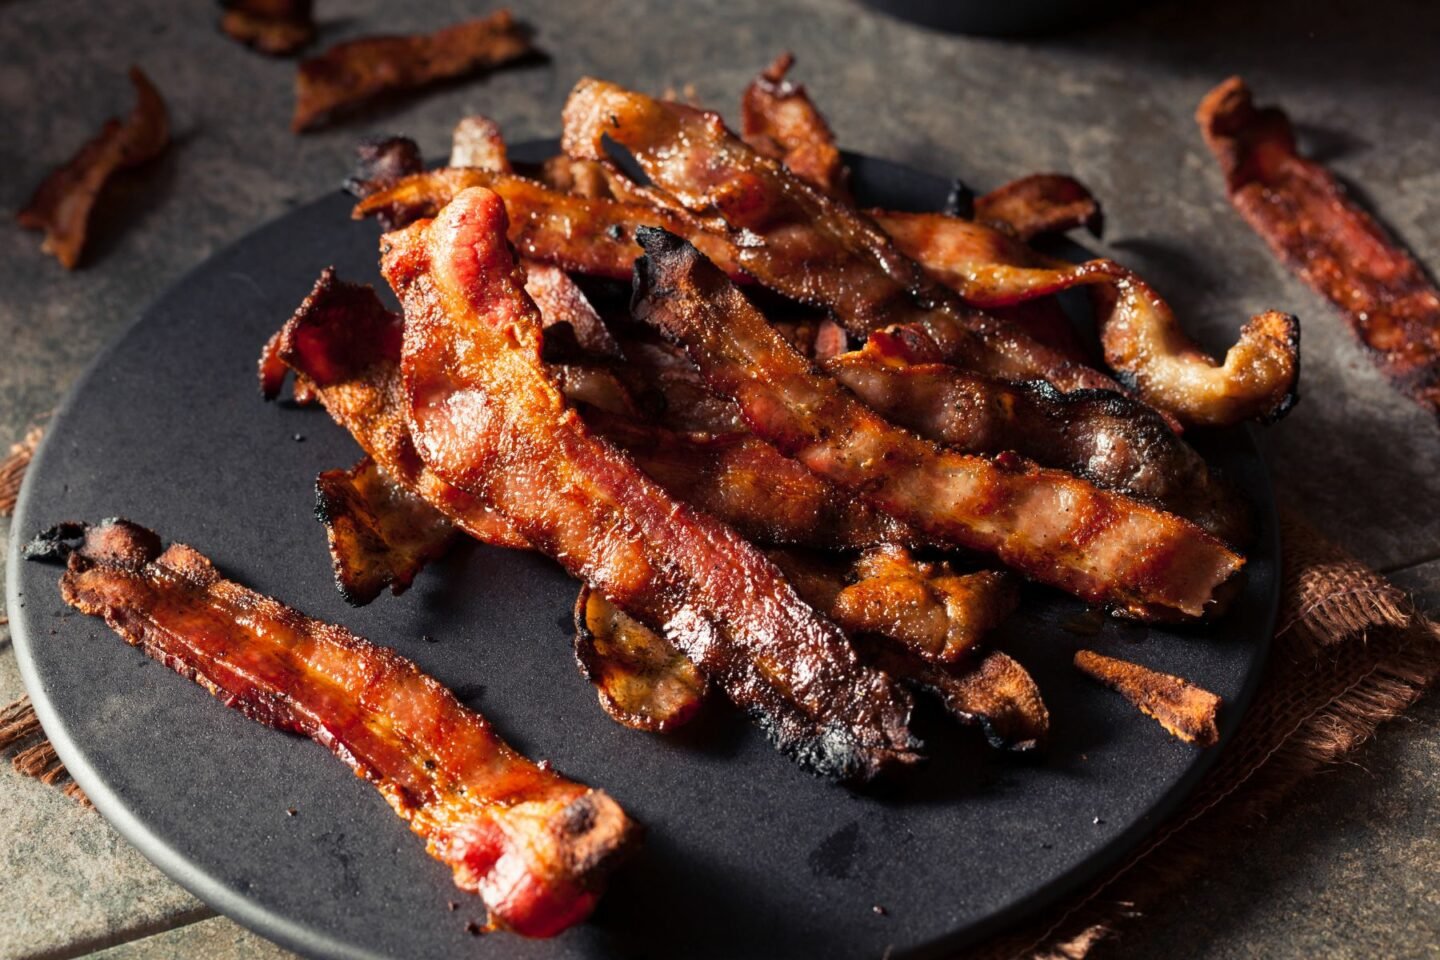 bacon rashers on black plate